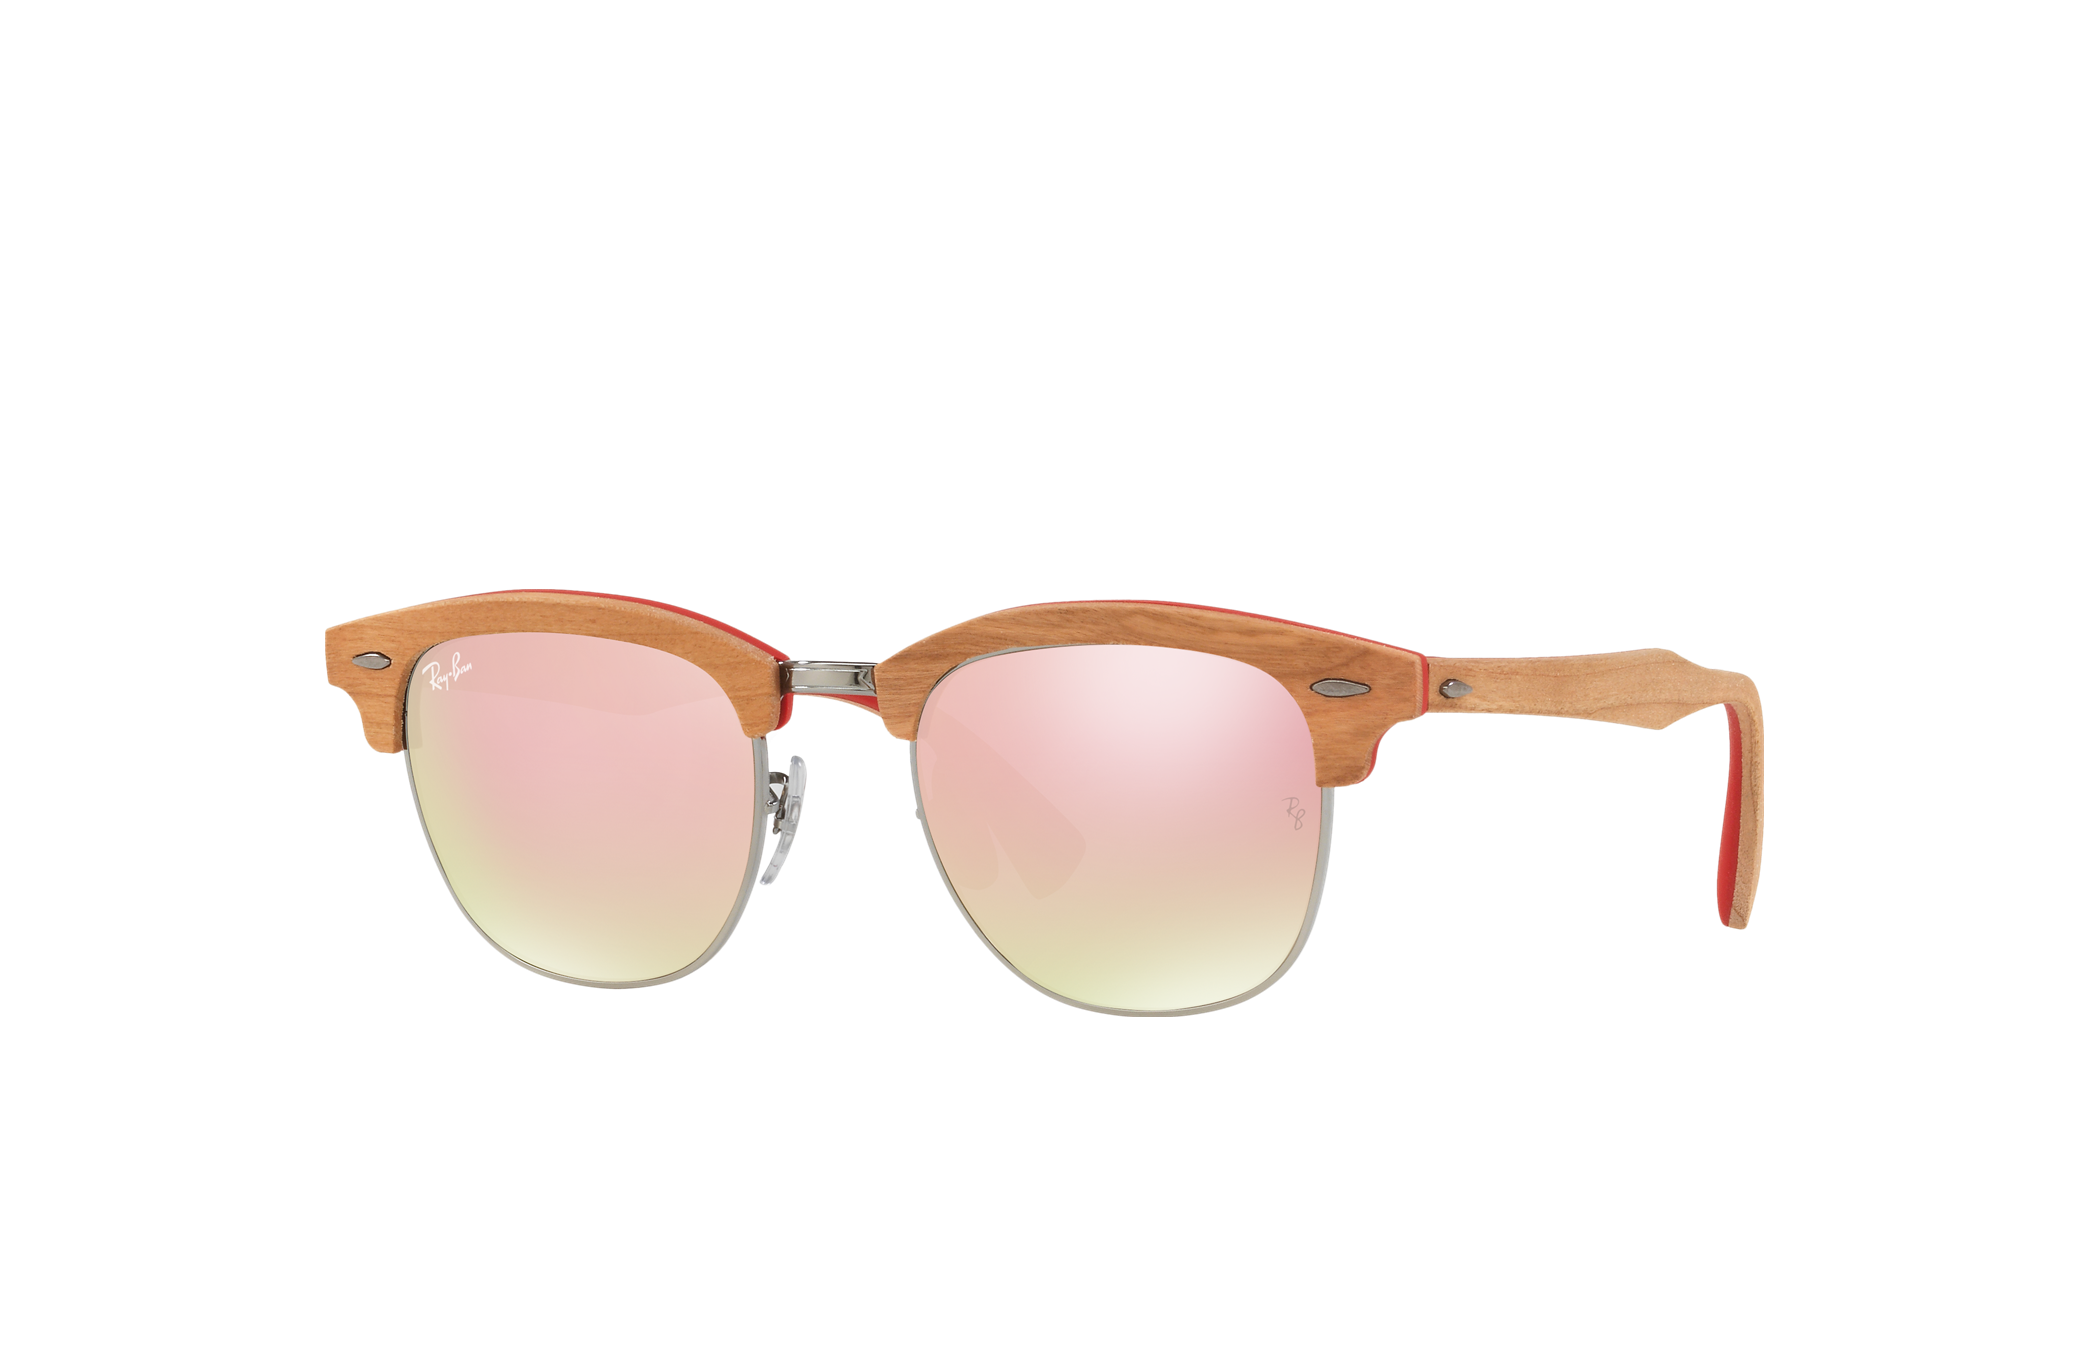 Share 268+ ray ban wood sunglasses